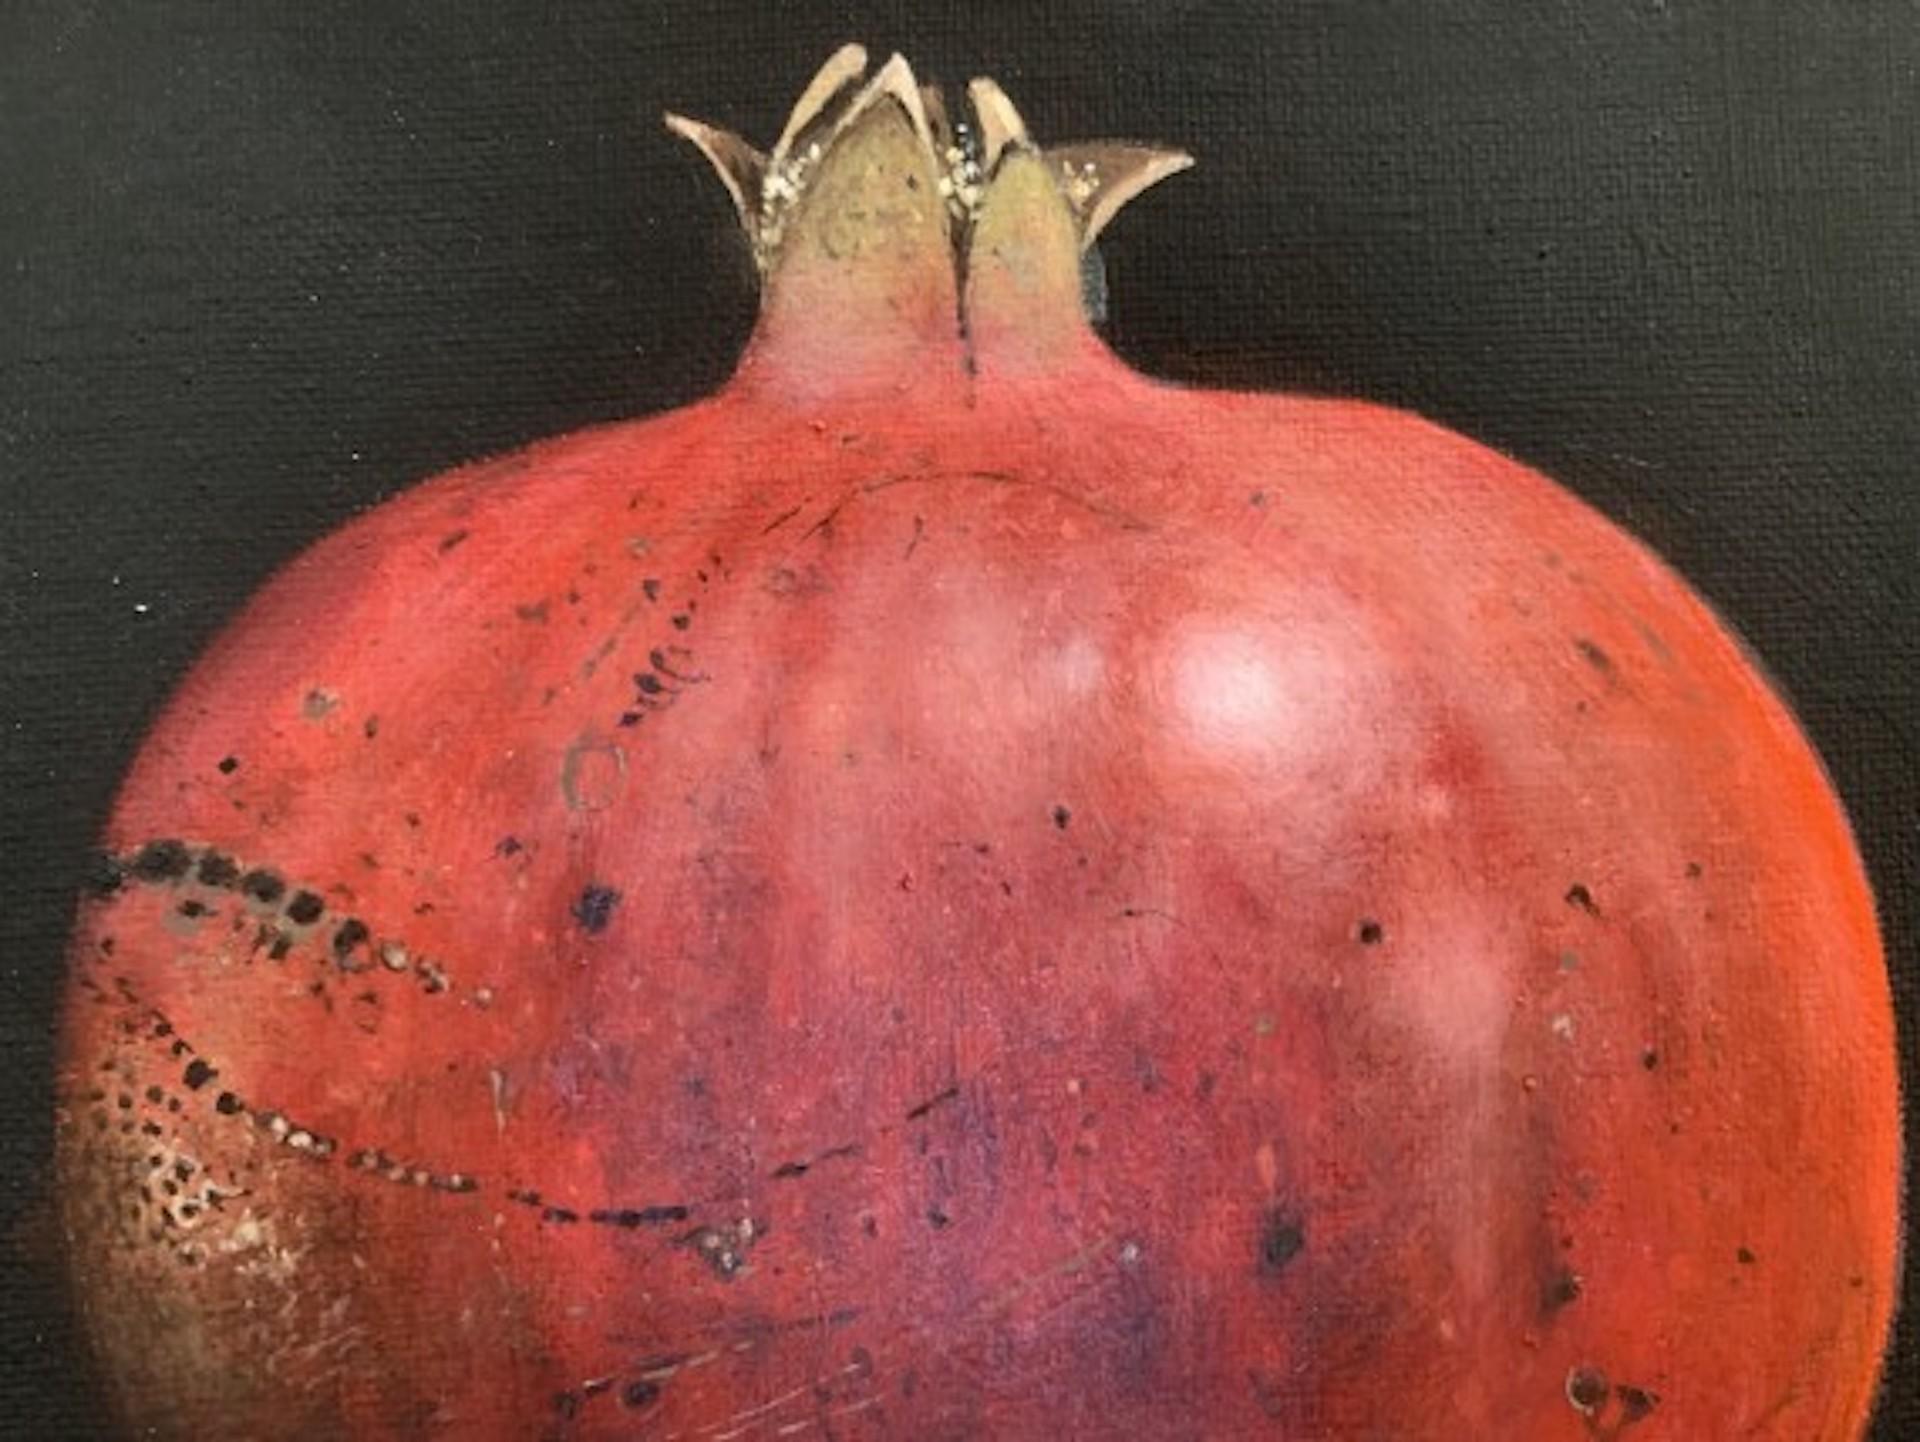 Baroke Red Pomegranate, Dani Humberstone, Original Fruit Painting, Realist Art 1